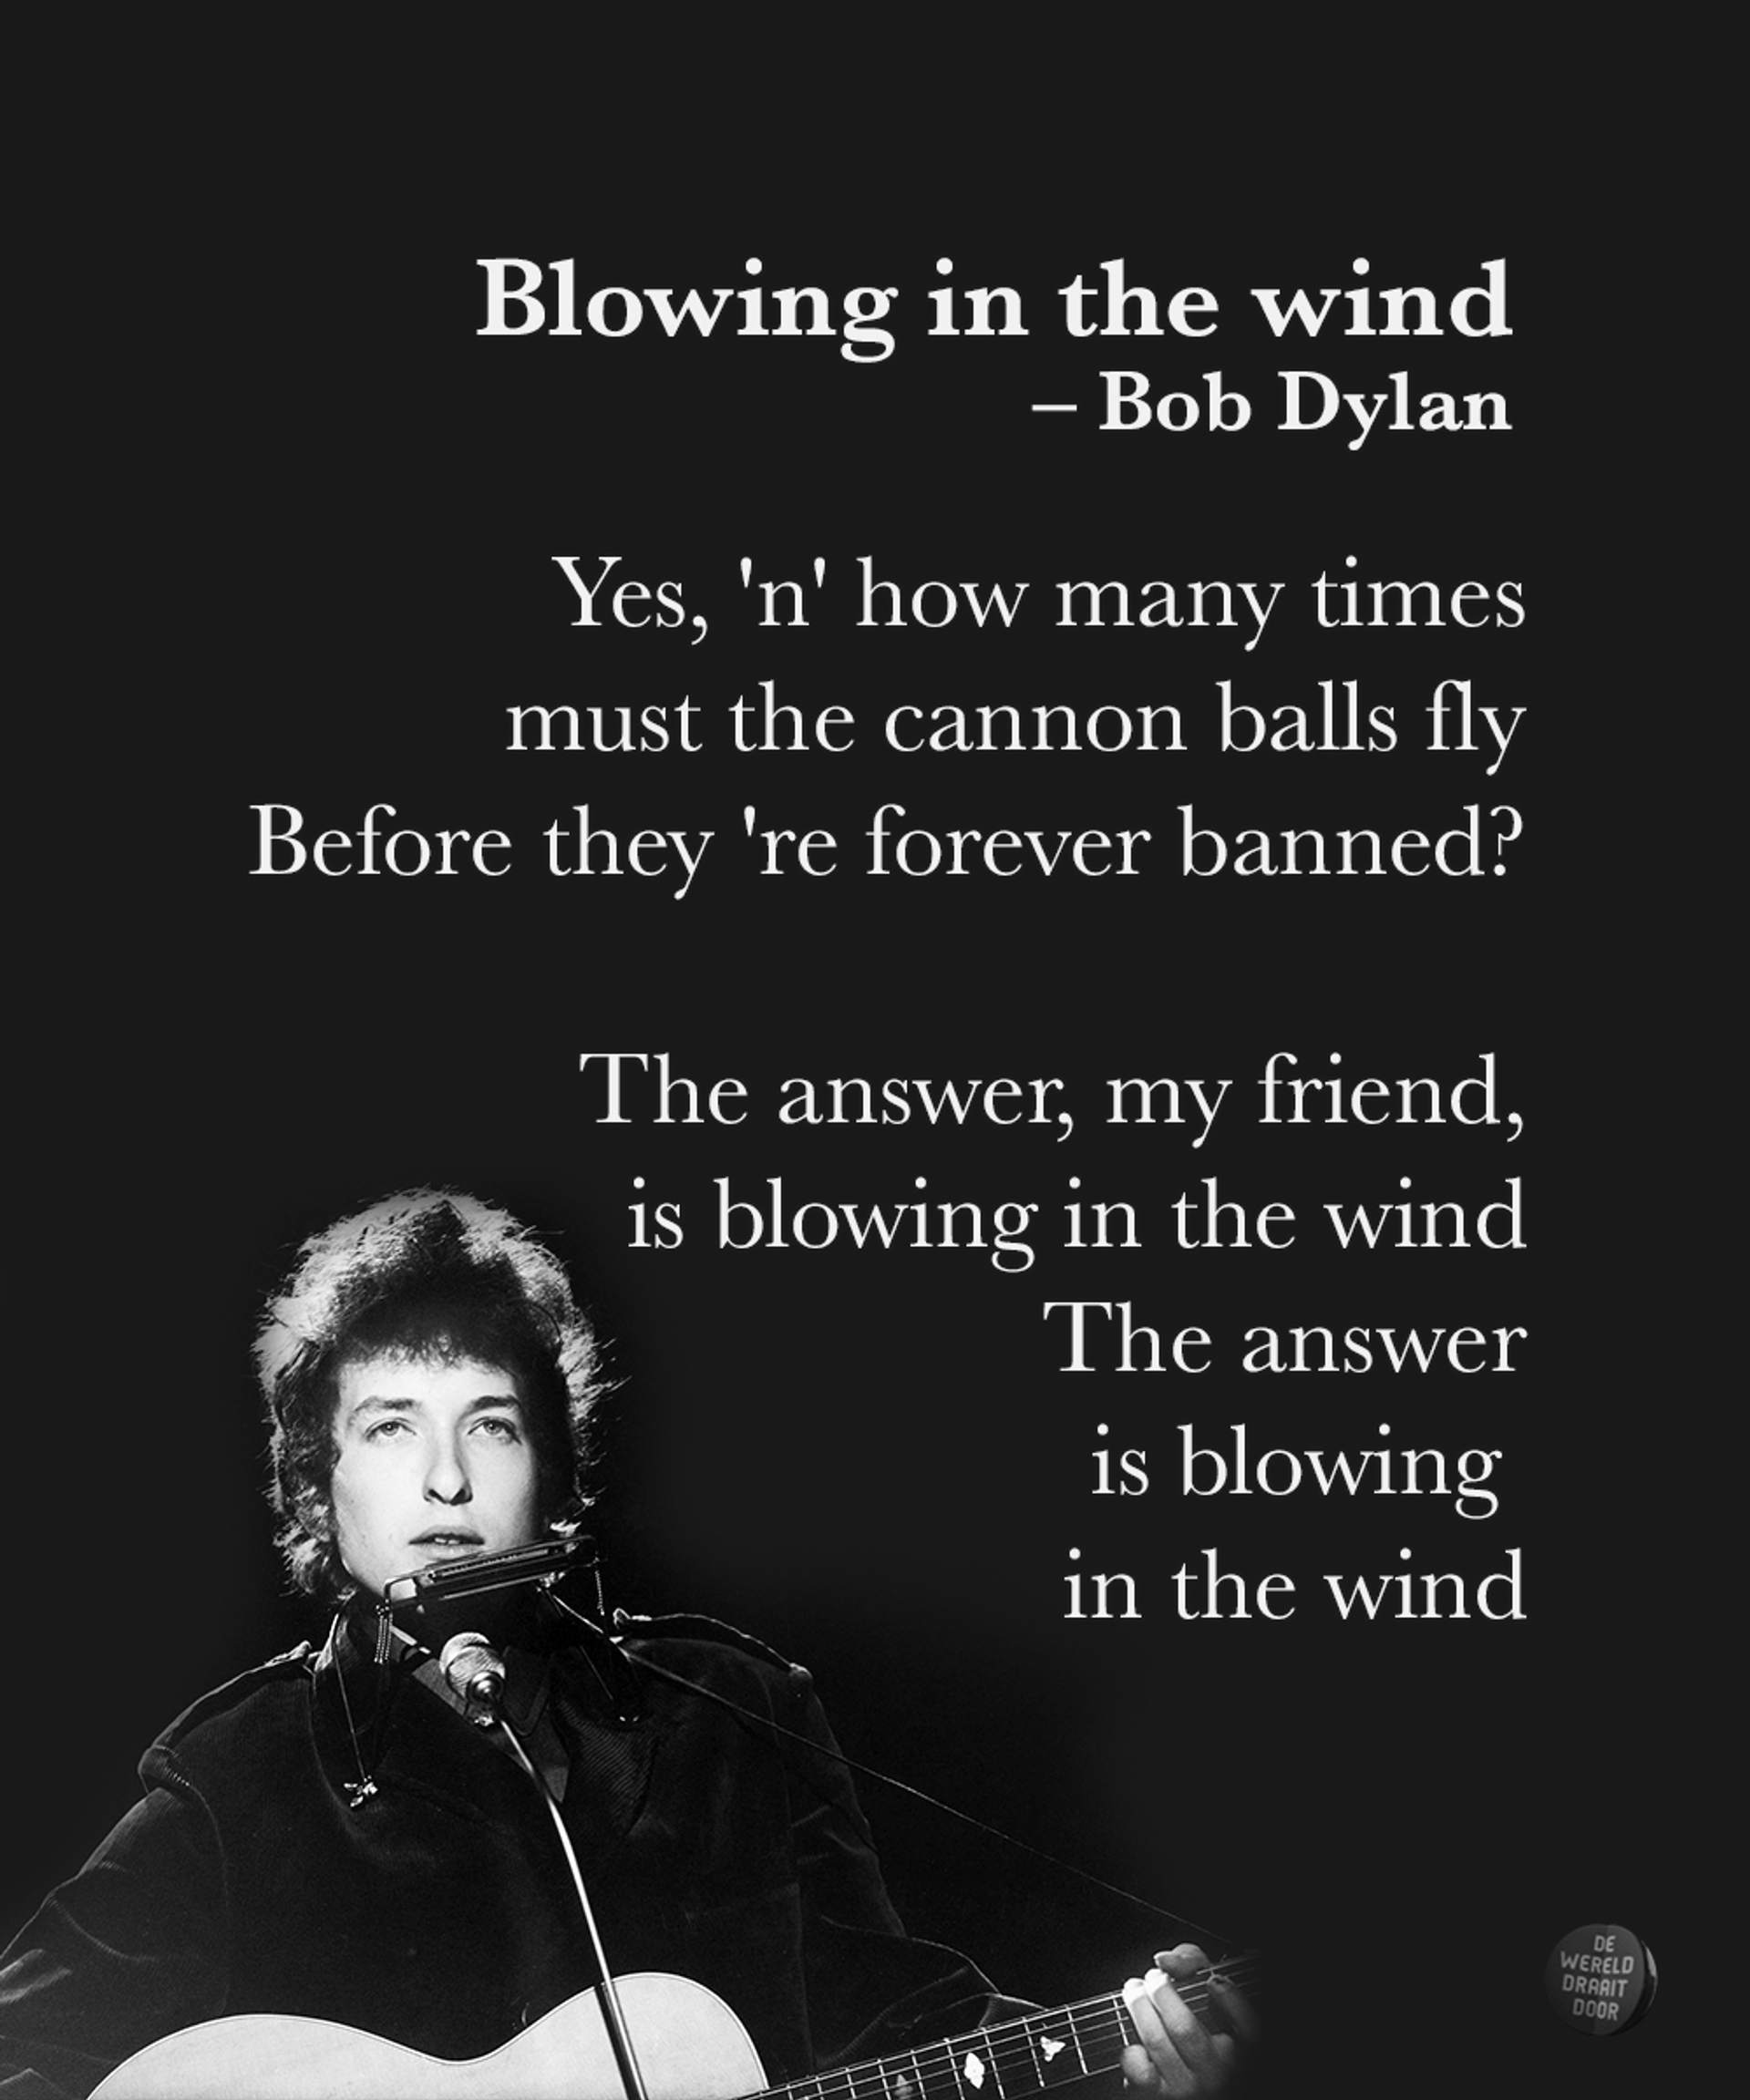 3. Bob Dylan